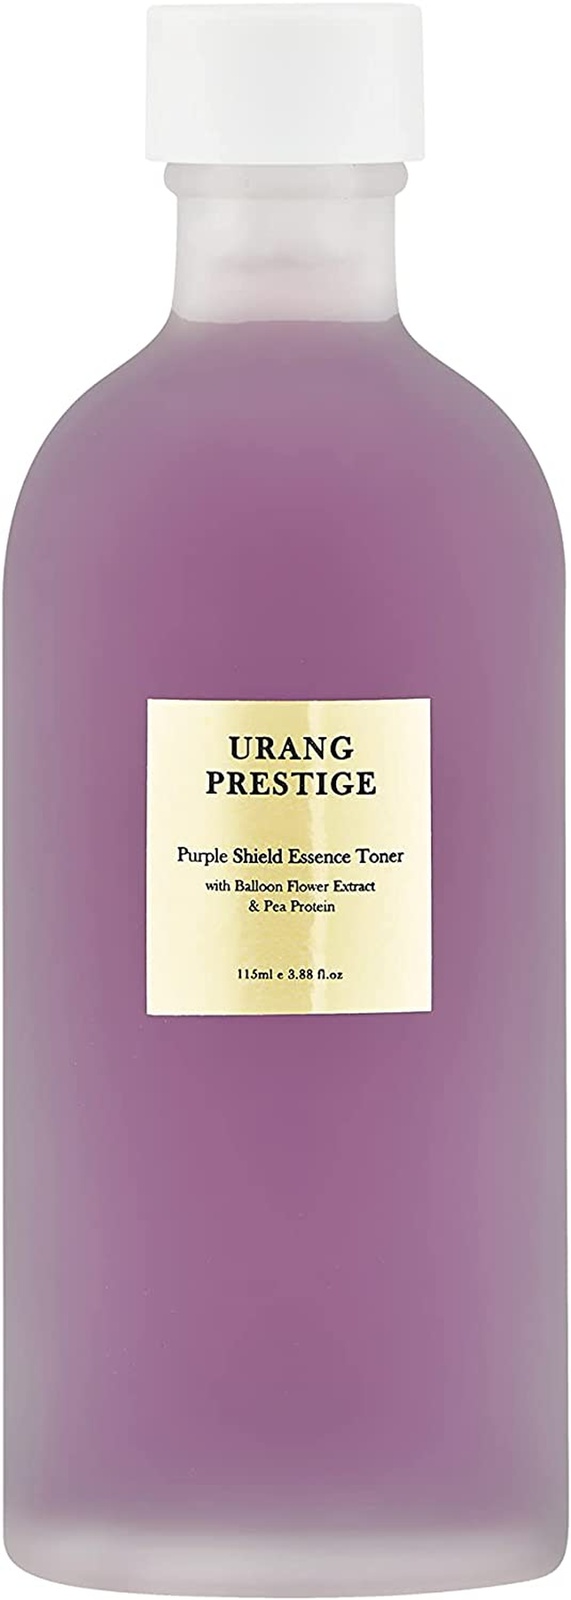 URANG Prestige Purple Shield Essence Toner